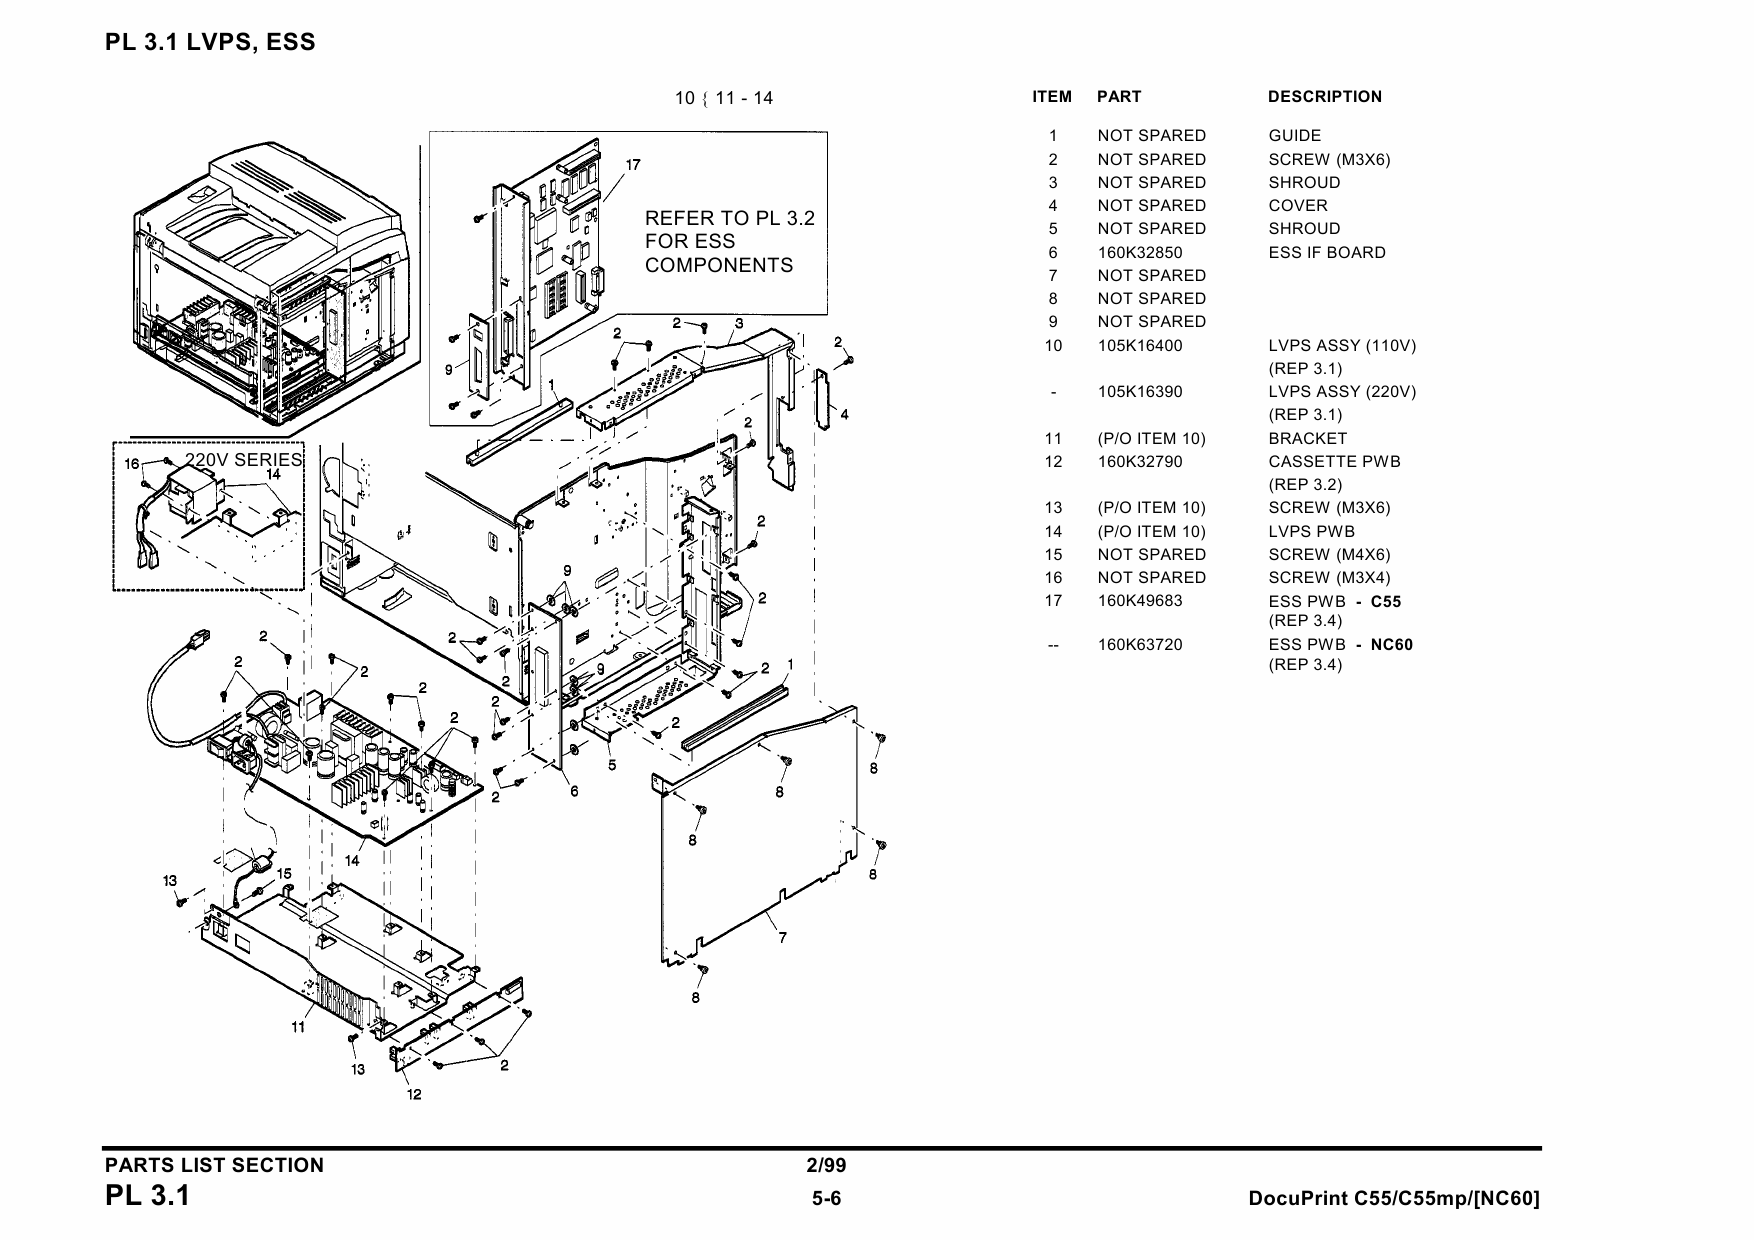 Xerox DocuPrint C55 C44mp NC60 Parts List and Service Manual-6